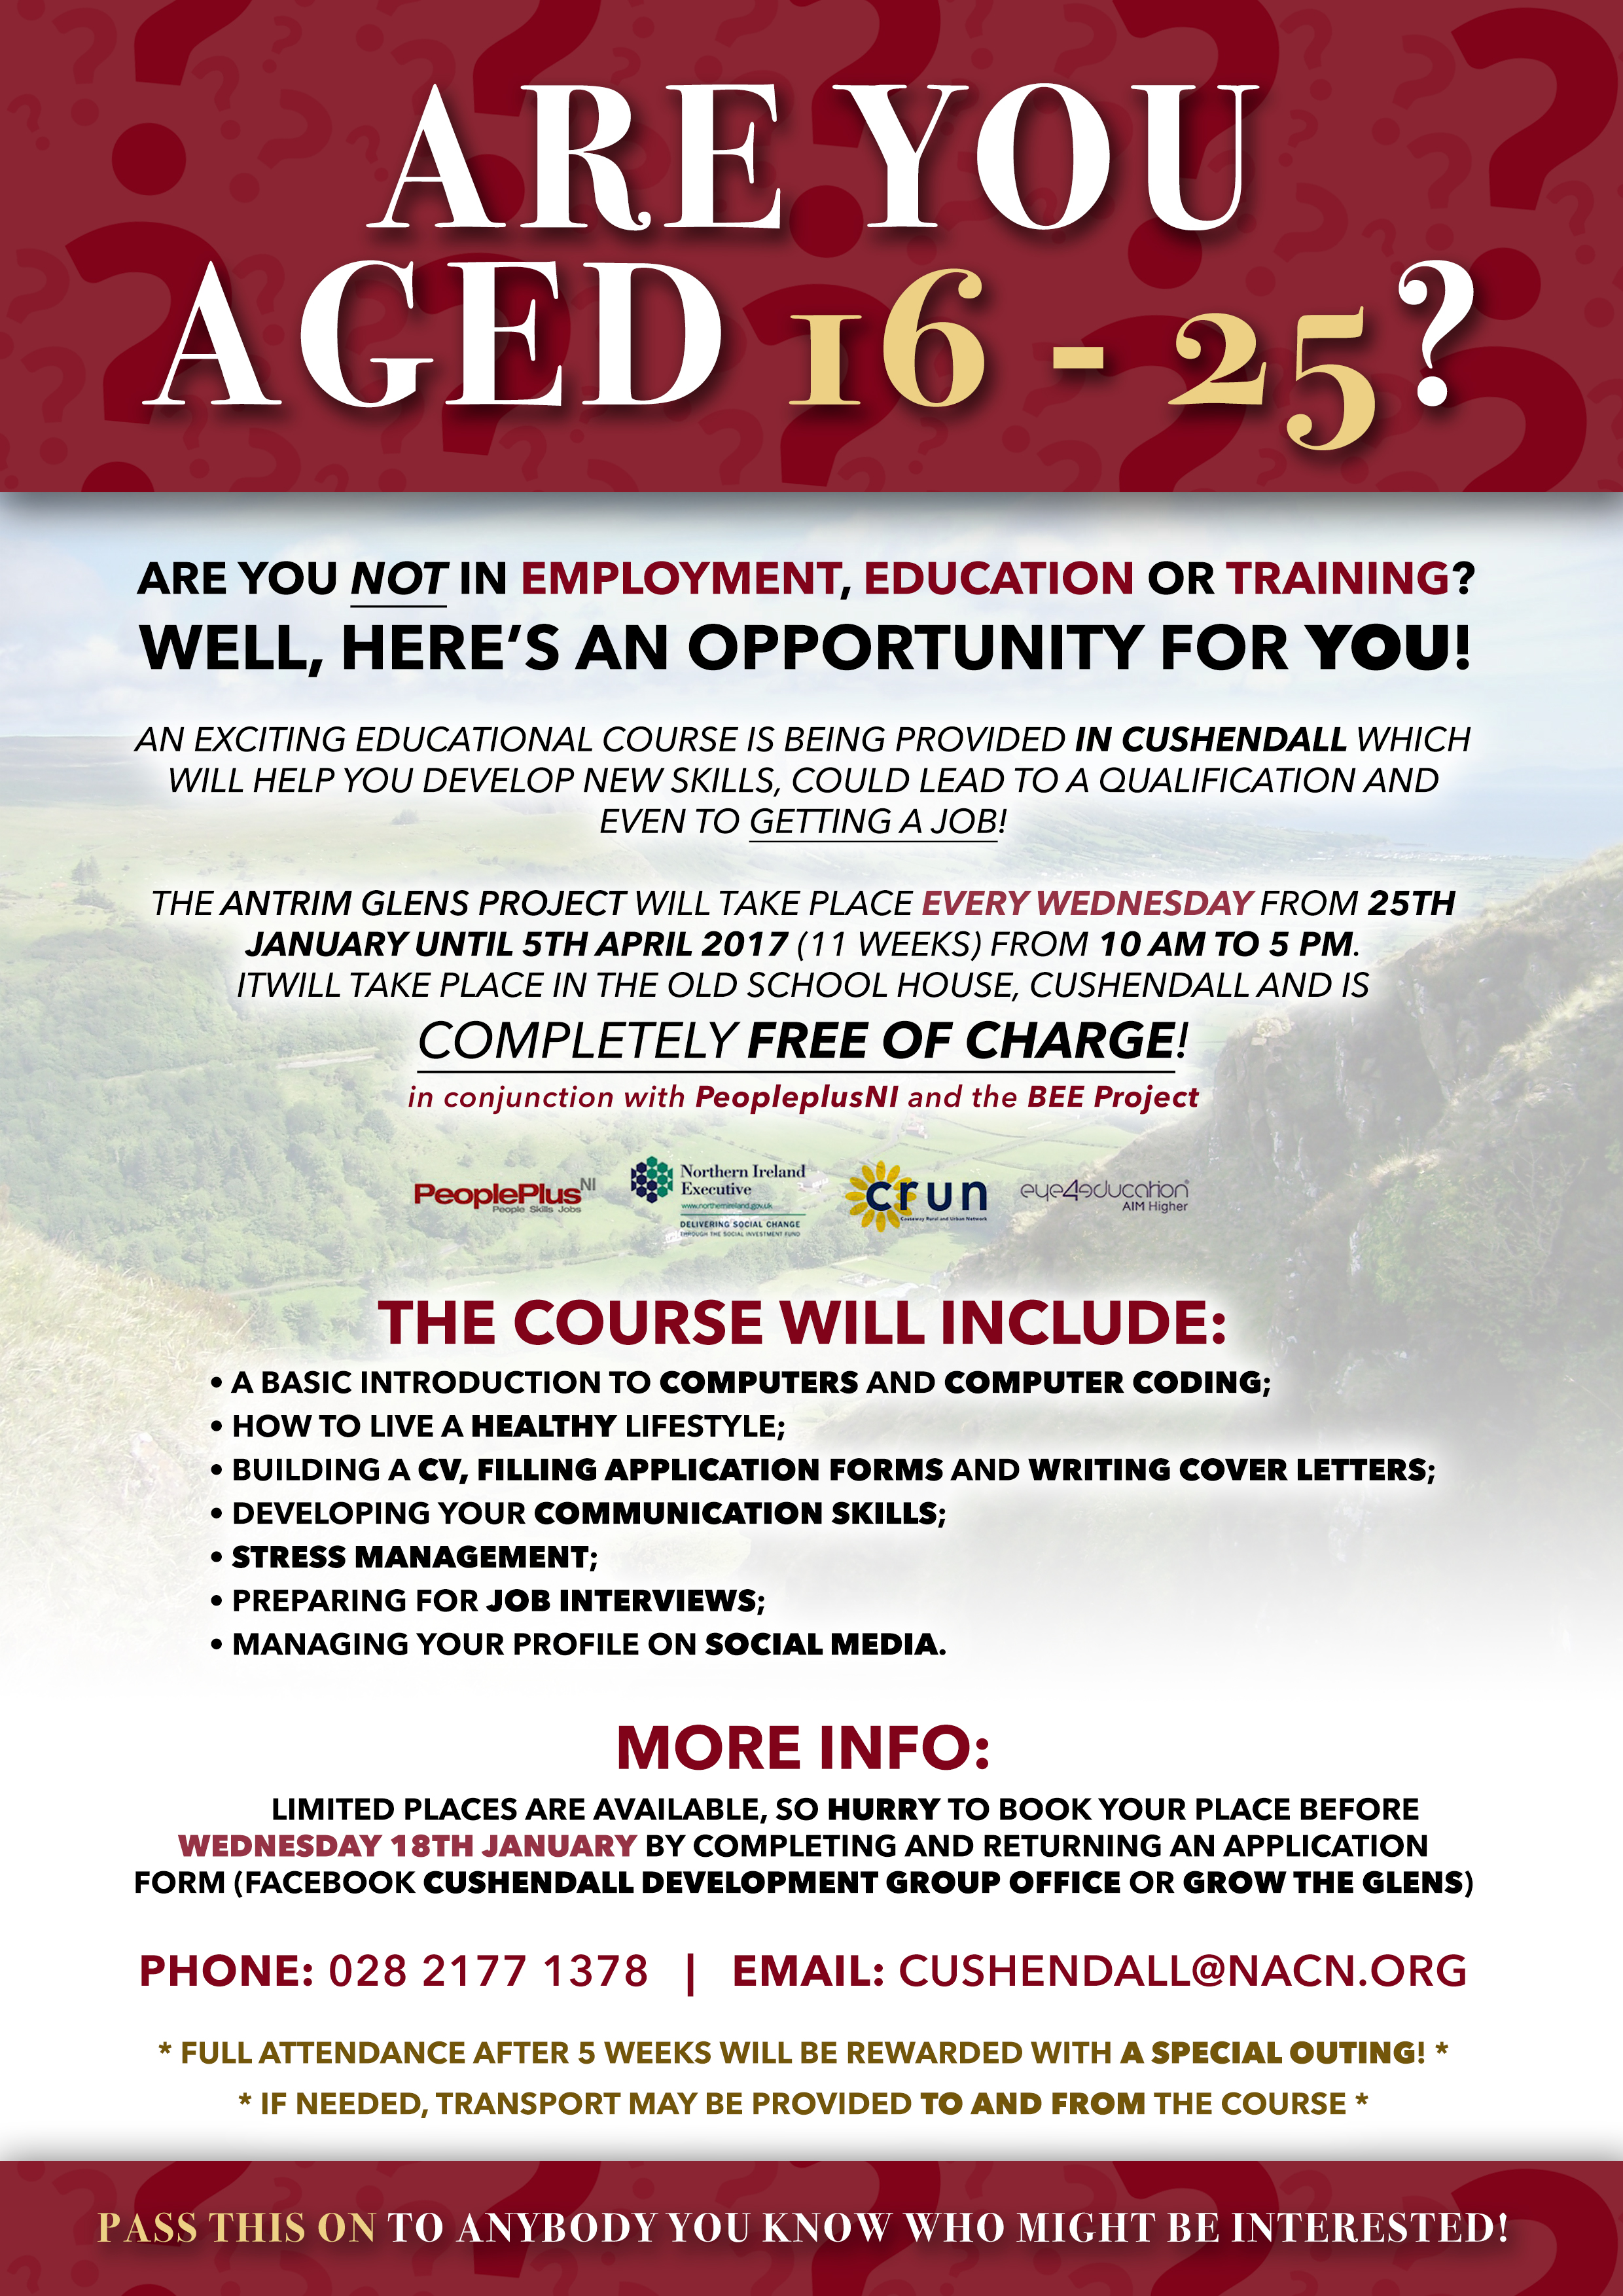 Free 11 Week Employability Course for 16 - 24 year olds Cushendall